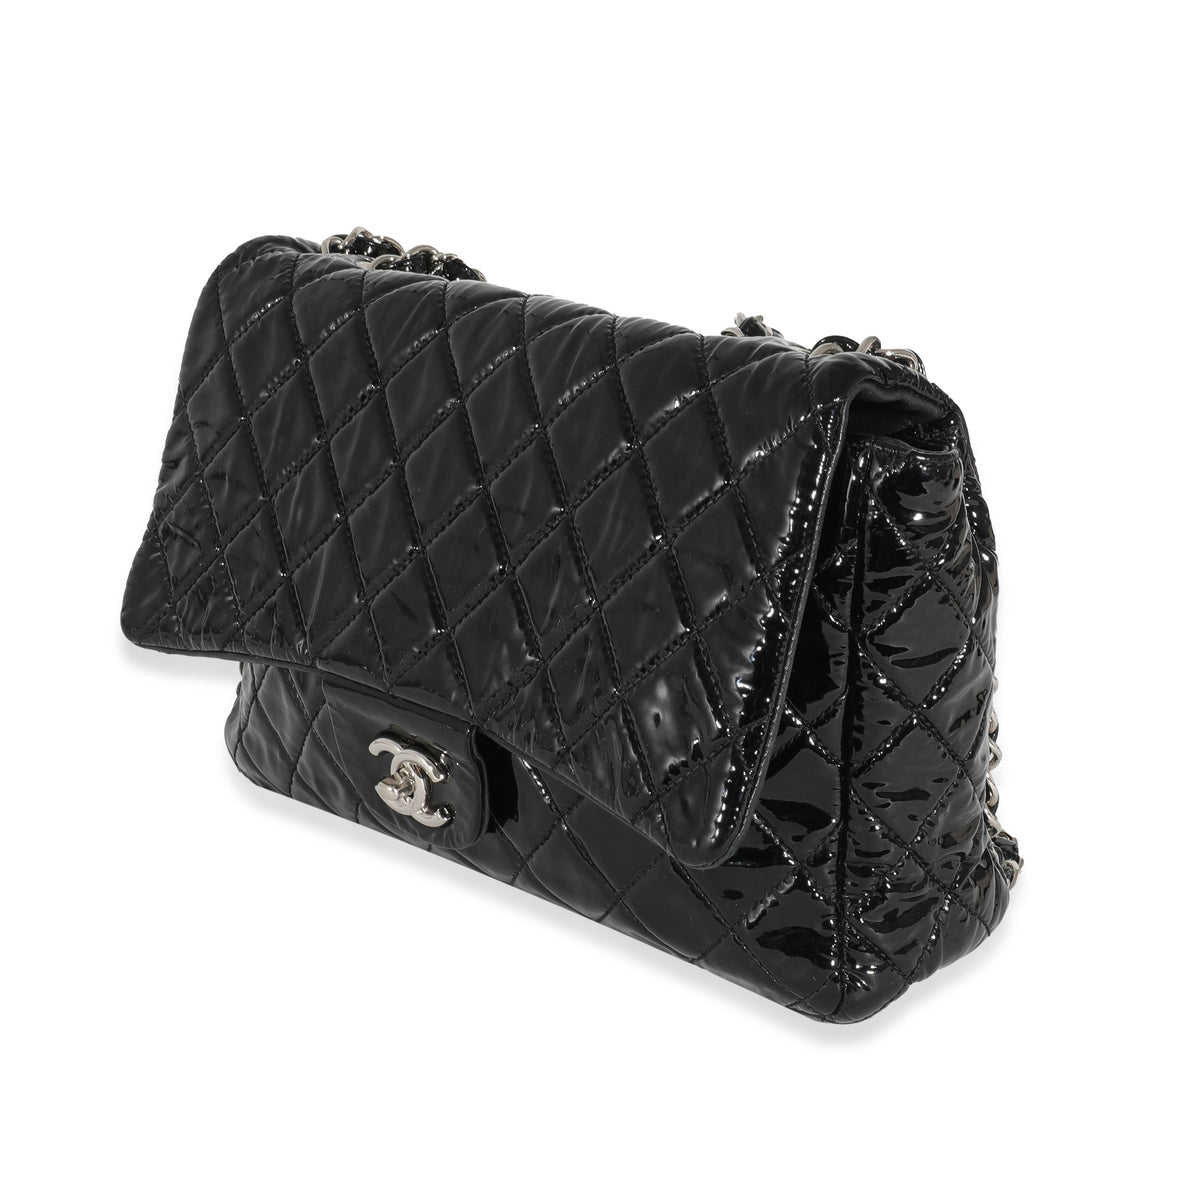 Chanel Black Patent Jumbo Flap Bag - Vintage Lux